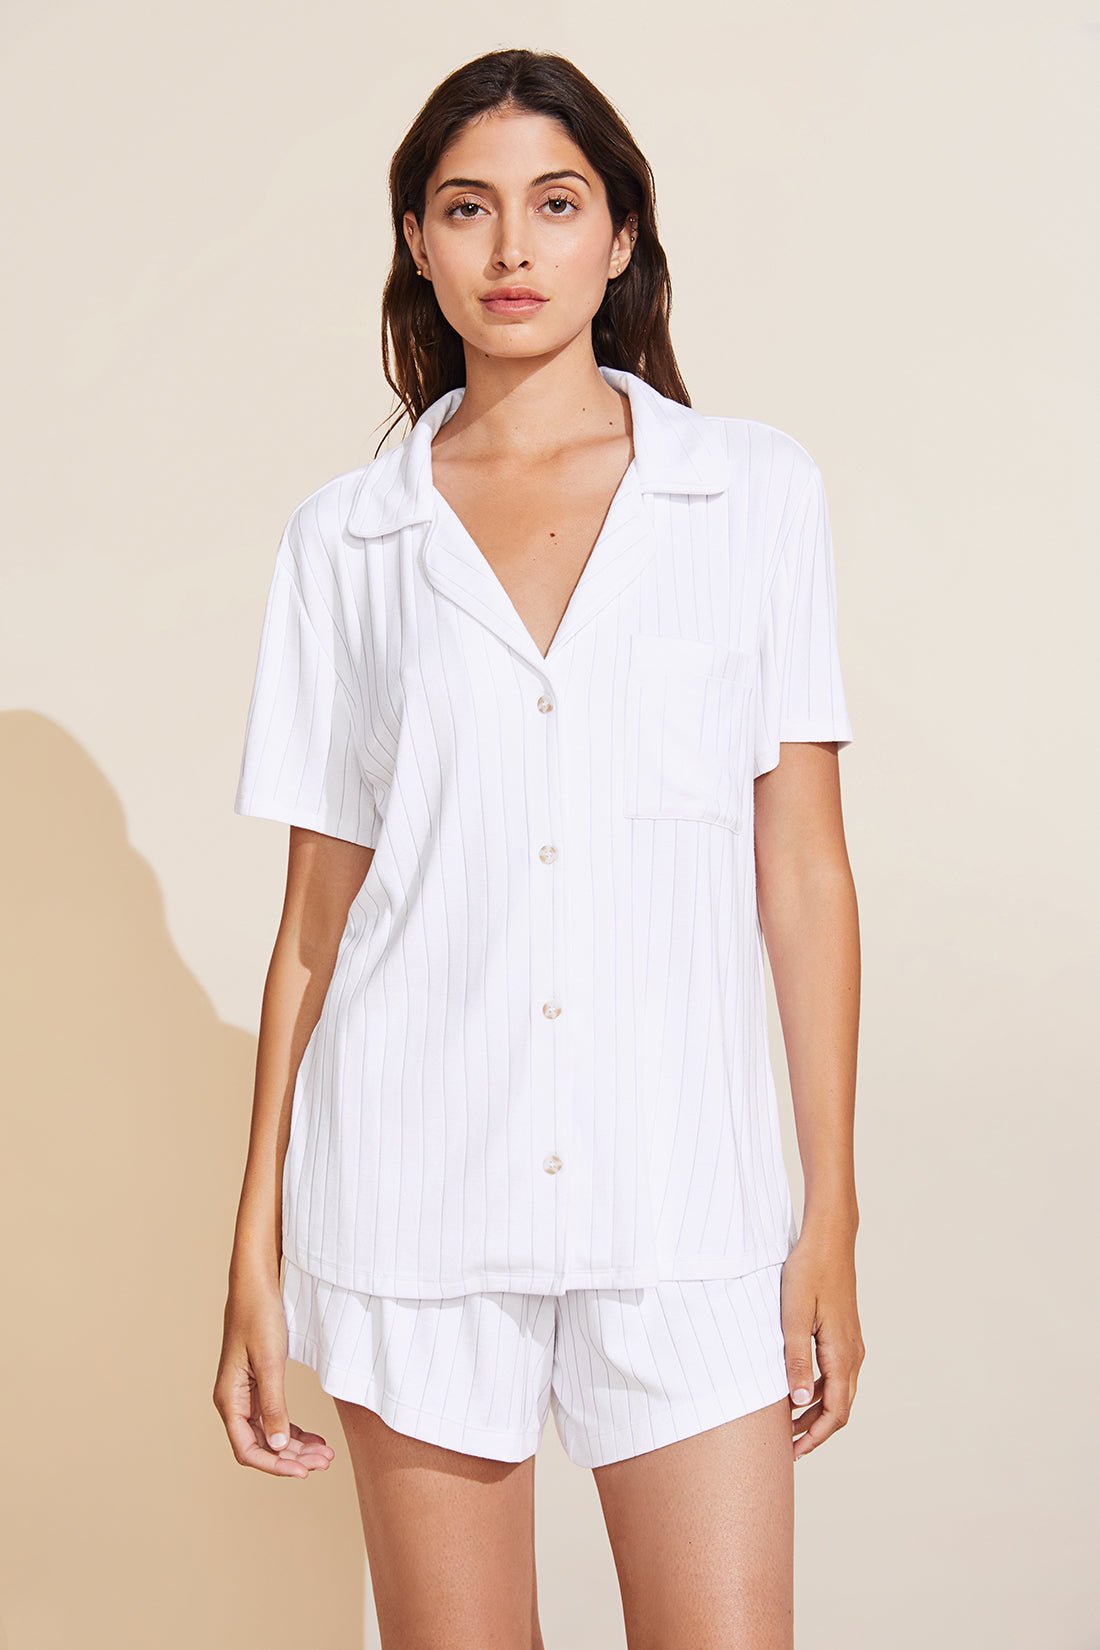 Women's Pajamas - Washable Silk & TENCEL™ Modal - Eberjey